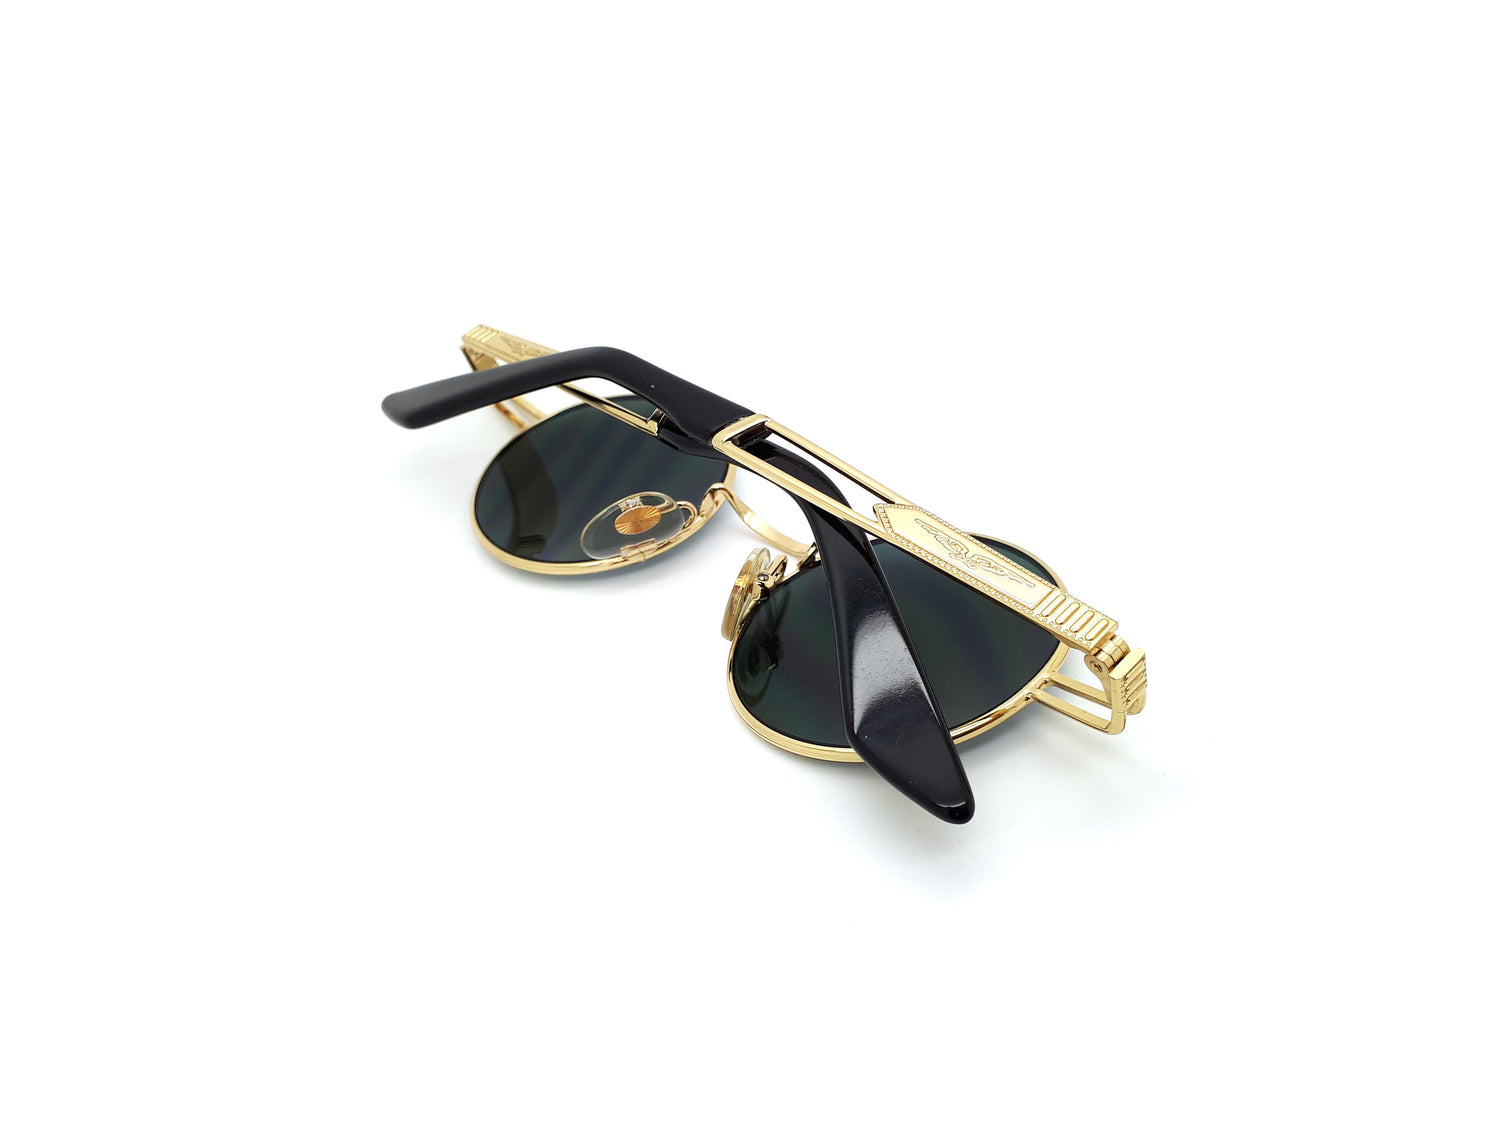 Louis Vuitton Z1017U LV in The Pocket Sunglasses, Black, One Size